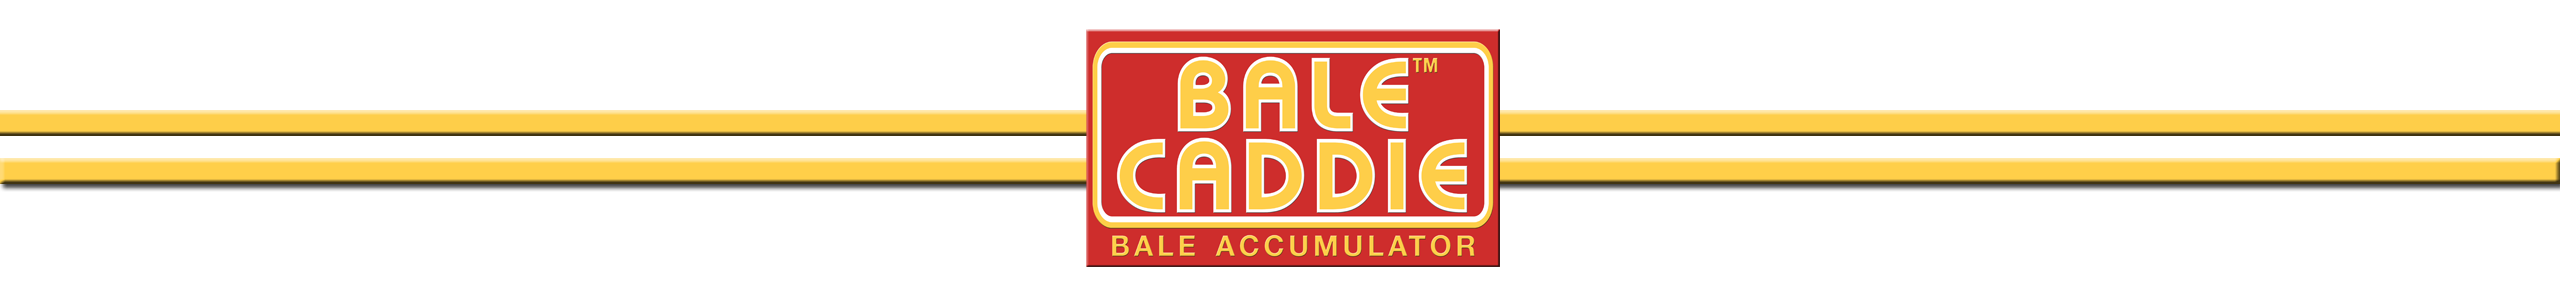 Bale Caddie logo